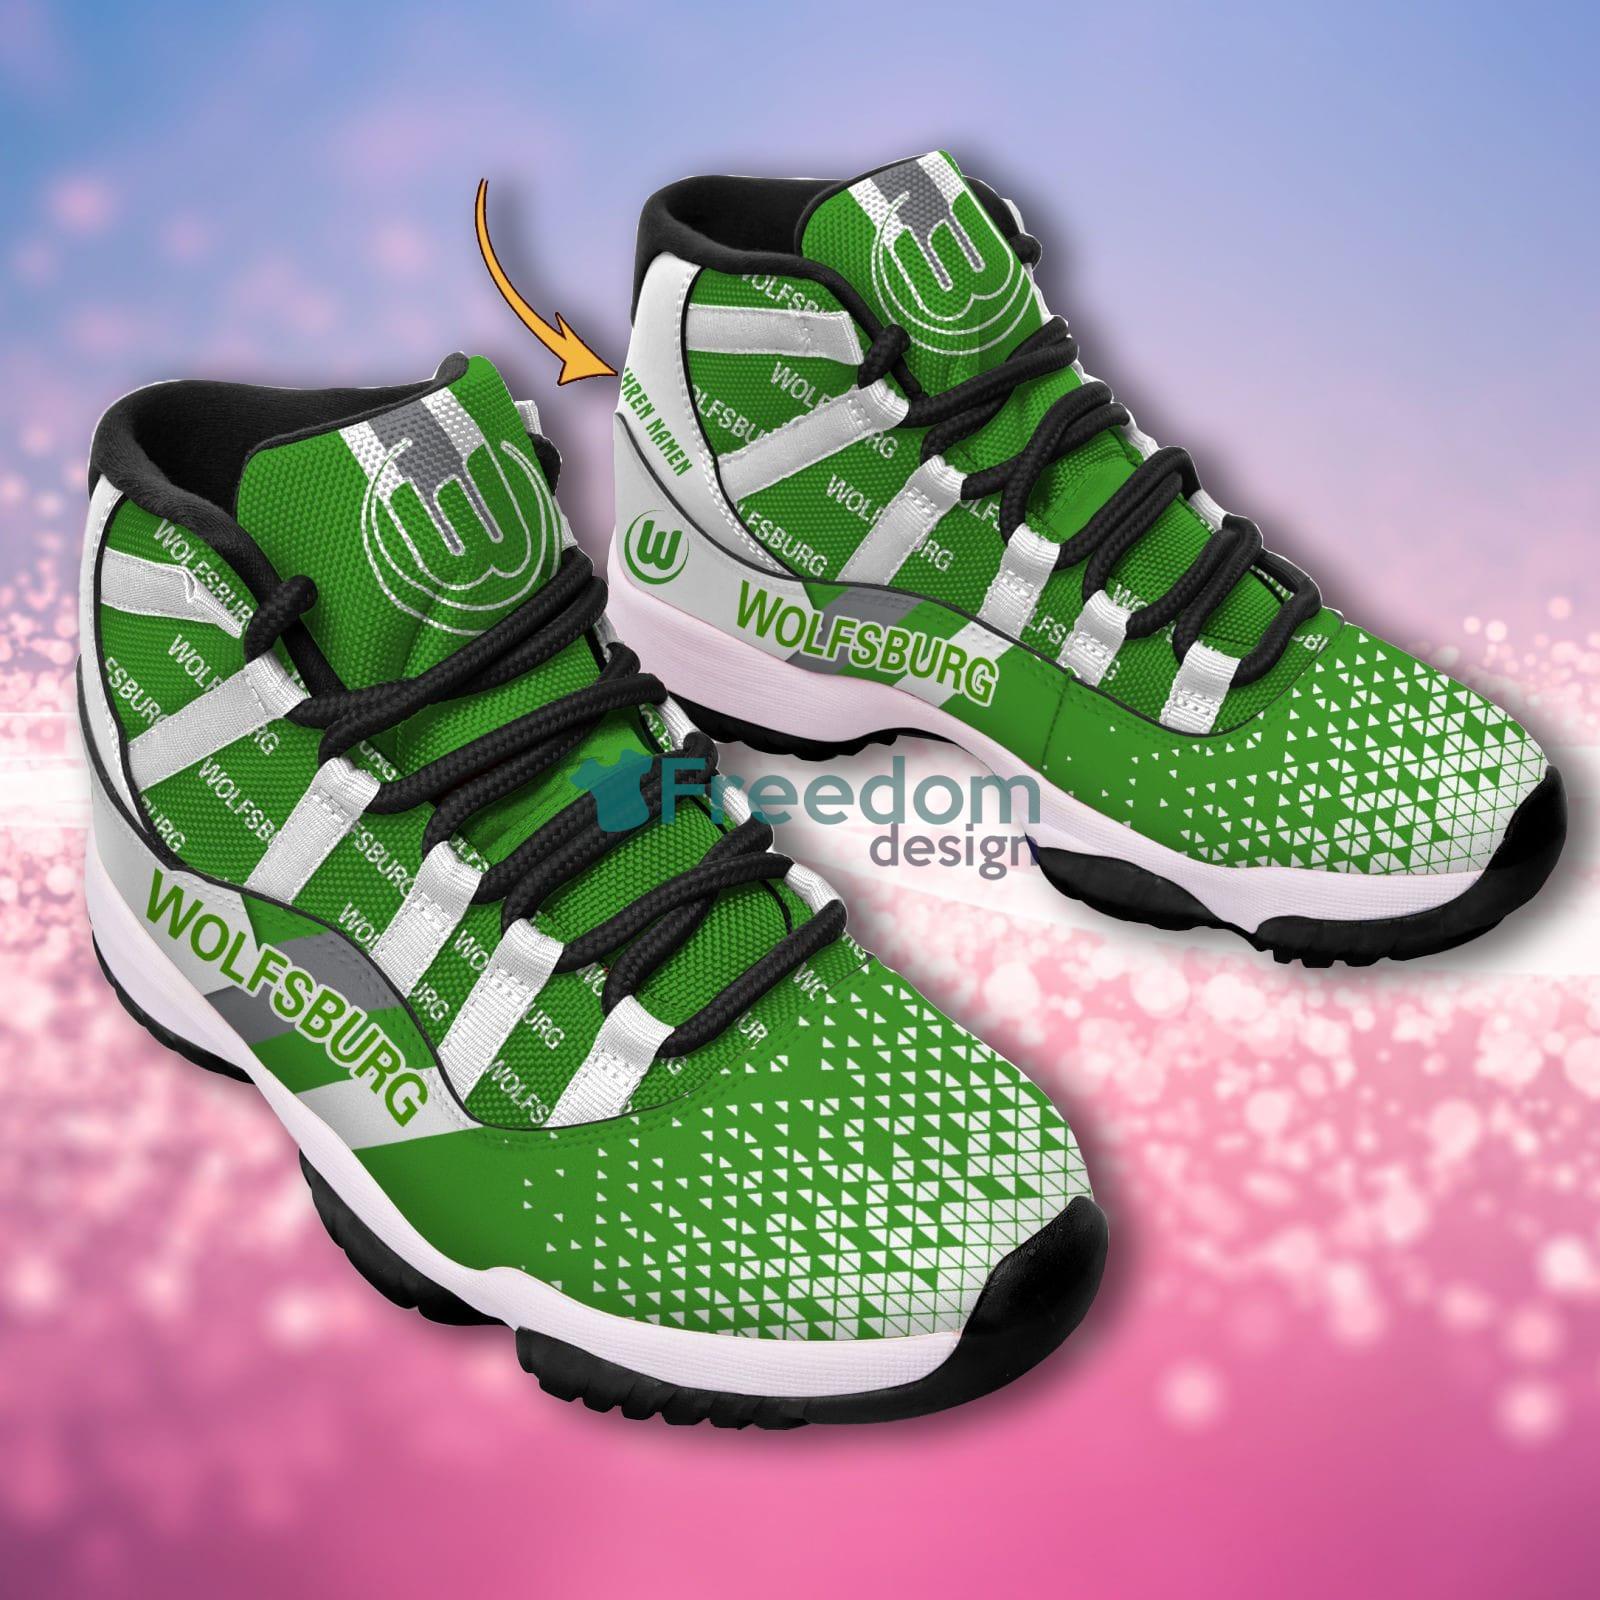 NBA Boston Celtics Air Jordan 13 Custom Name Shoes - Freedomdesign